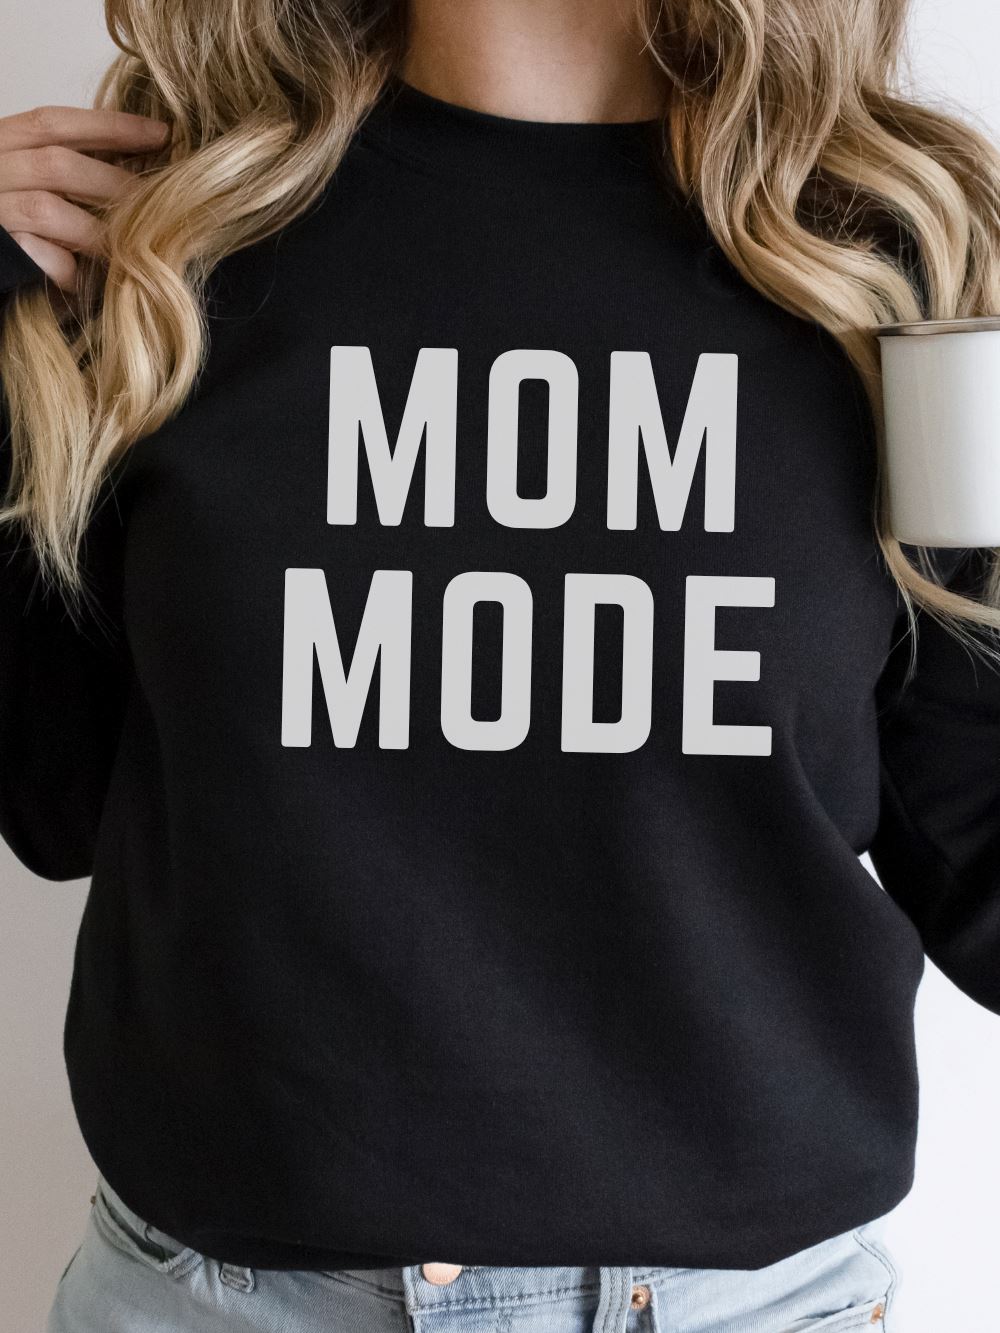 Mom Life & Women's Graphic T-Shirts, Sweatshirts, & More